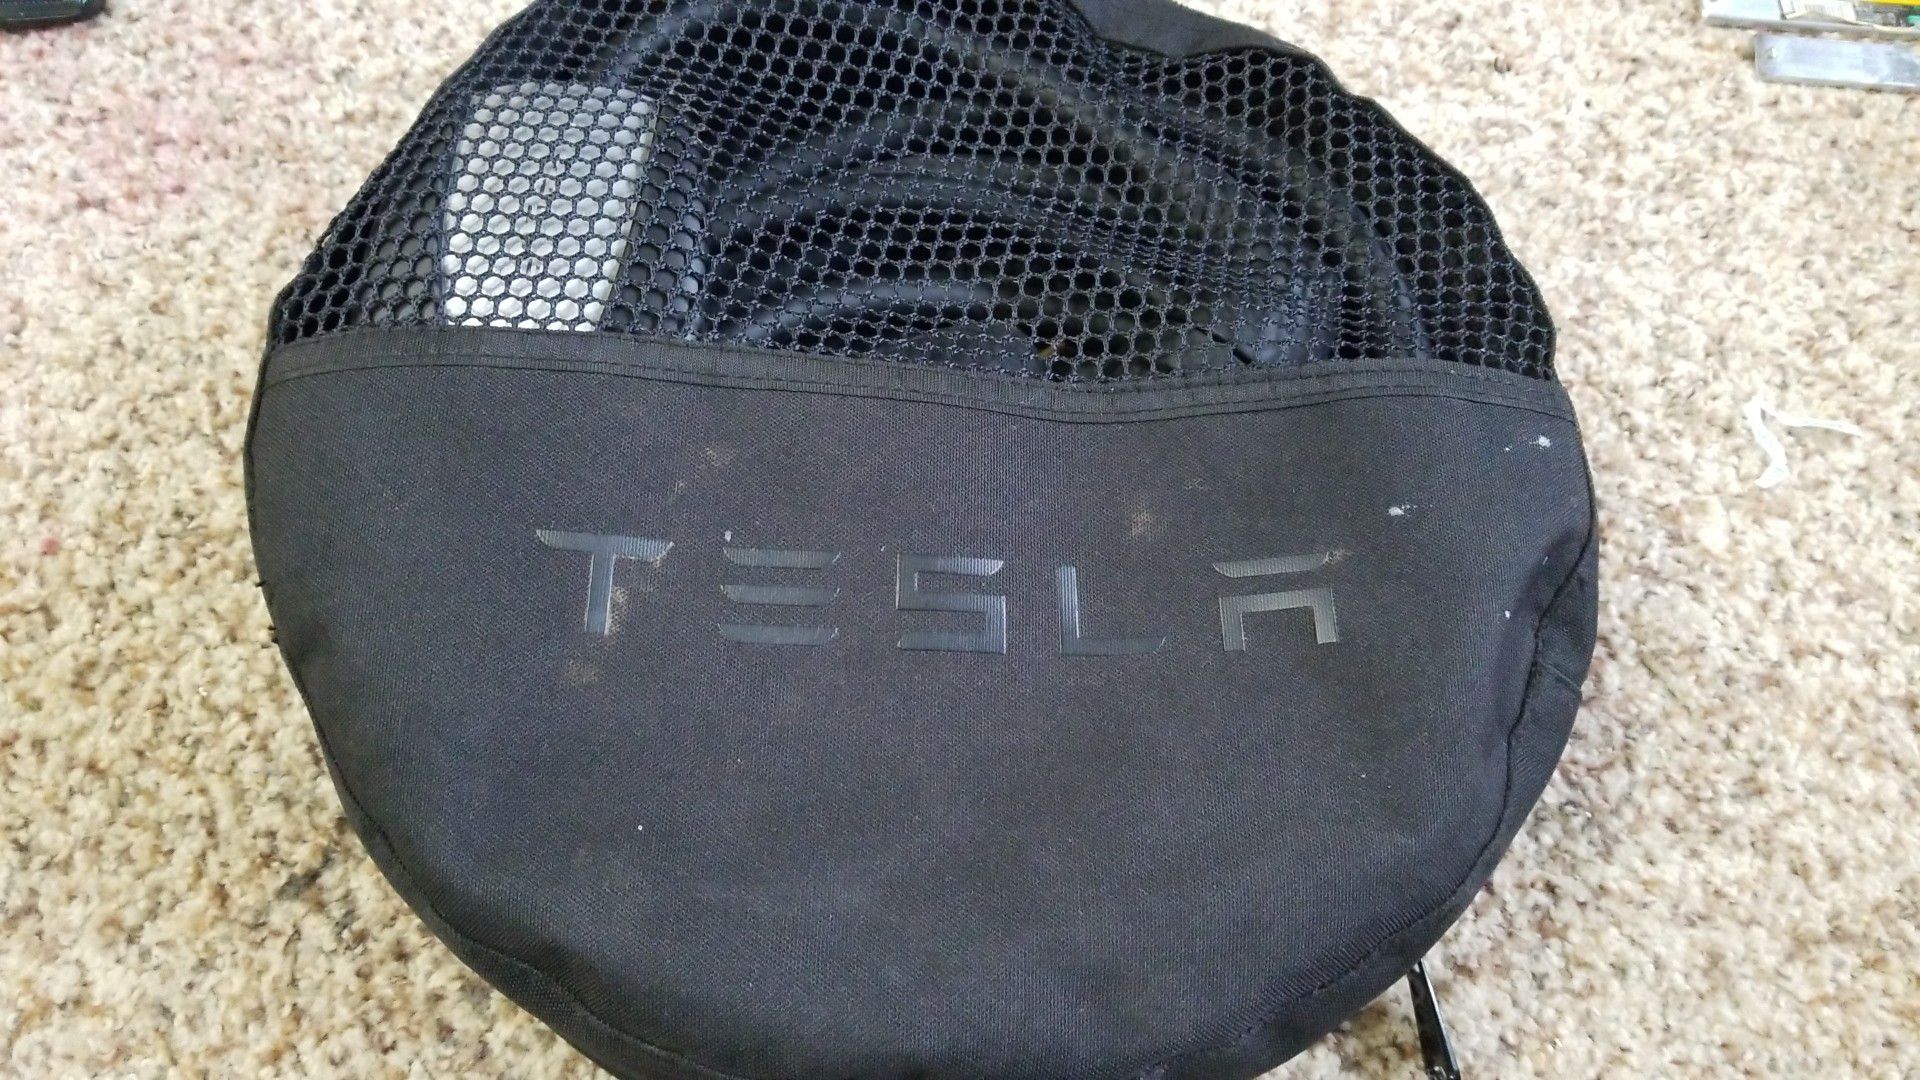 Tesla 40 Amp Model X, model S, model 3 high power charger